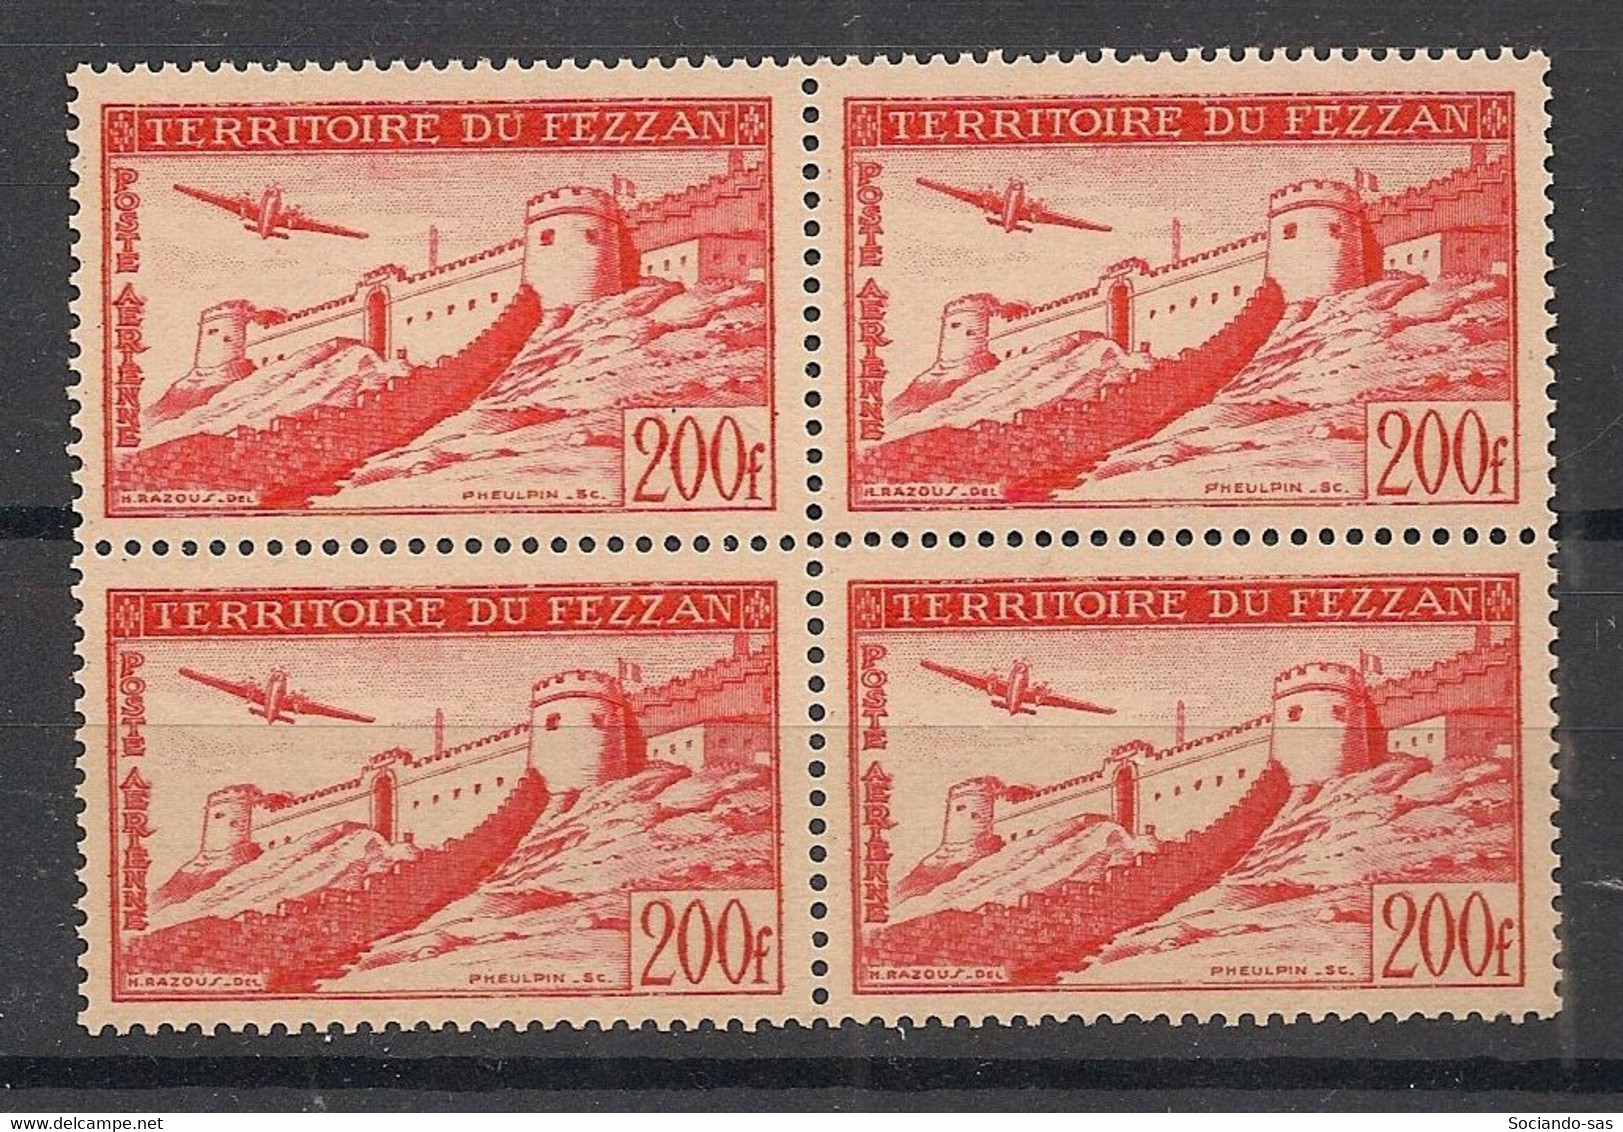 FEZZAN - 1951 - Poste Aérienne PA N°Yv. 7 - Sebha 200f Rouge - Bloc De 4 - Neuf Luxe ** / MNH / Postfrisch - Neufs